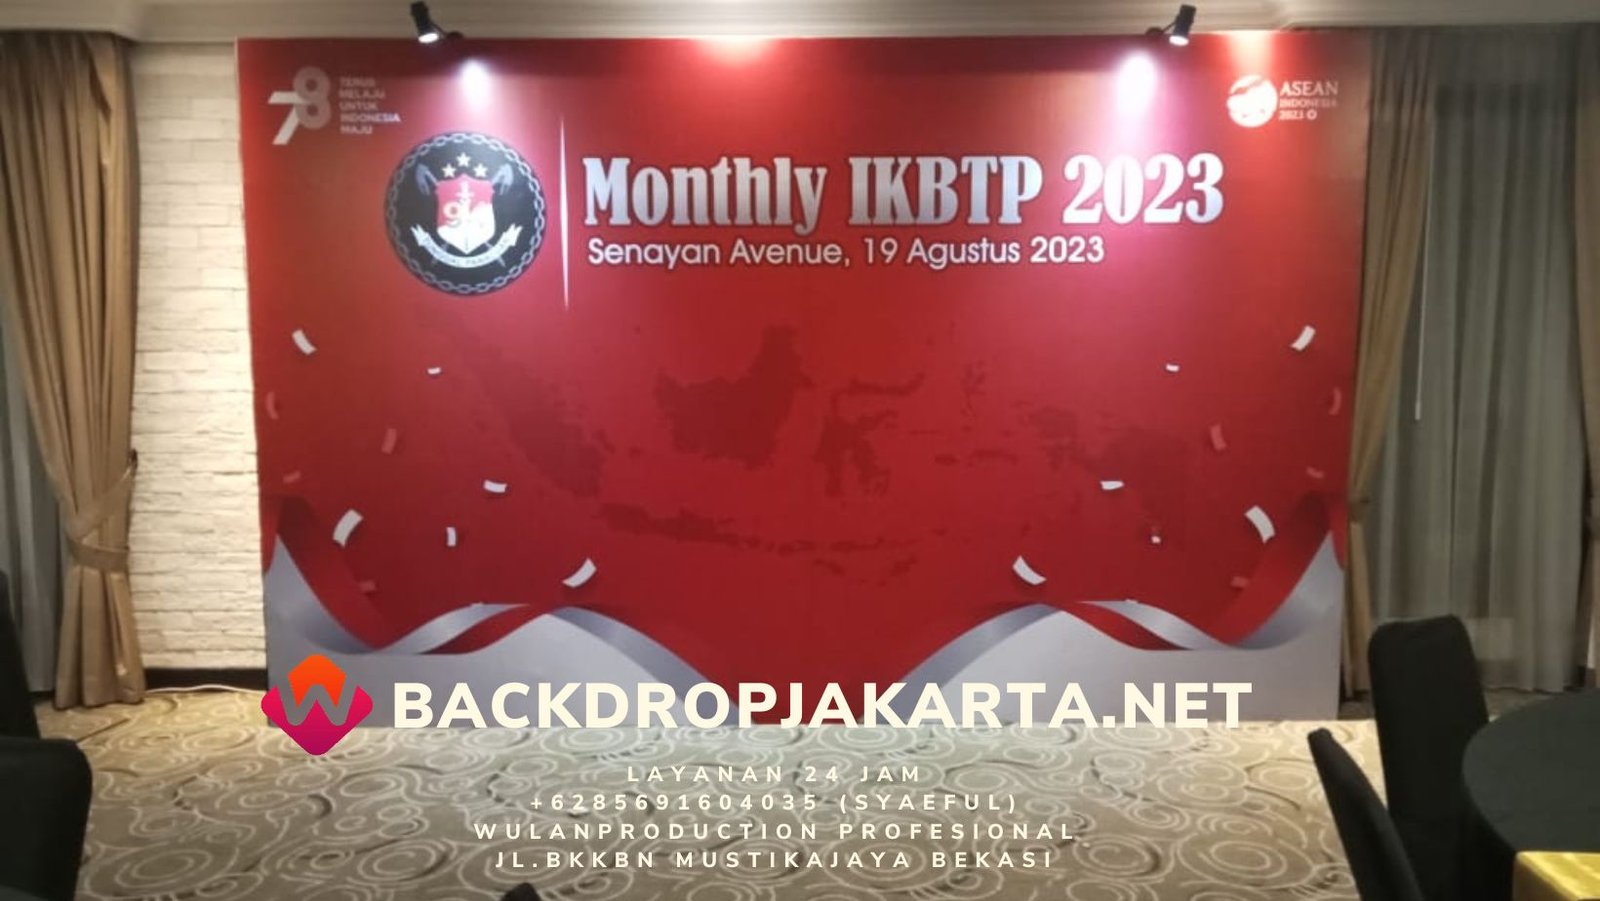 Menyewakan Backdrop Siap Antar Jakarta